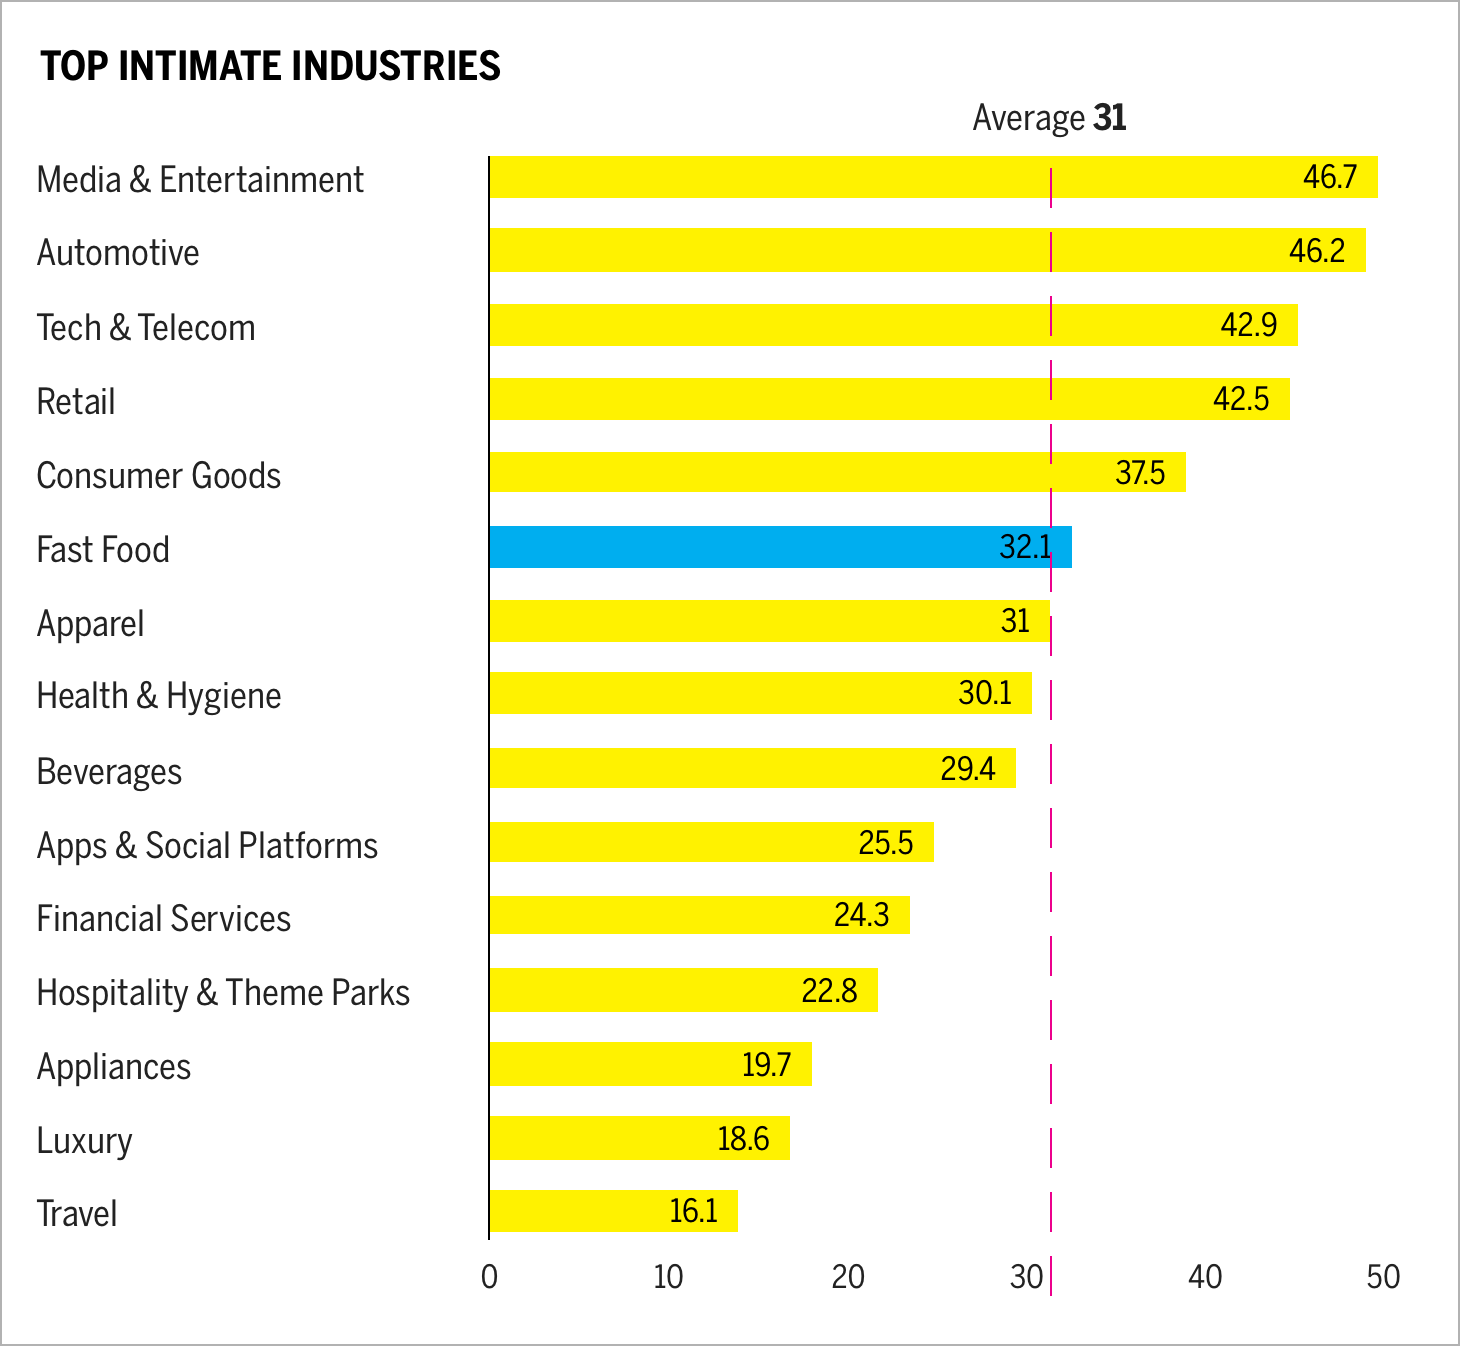 Top 15 intimate industries